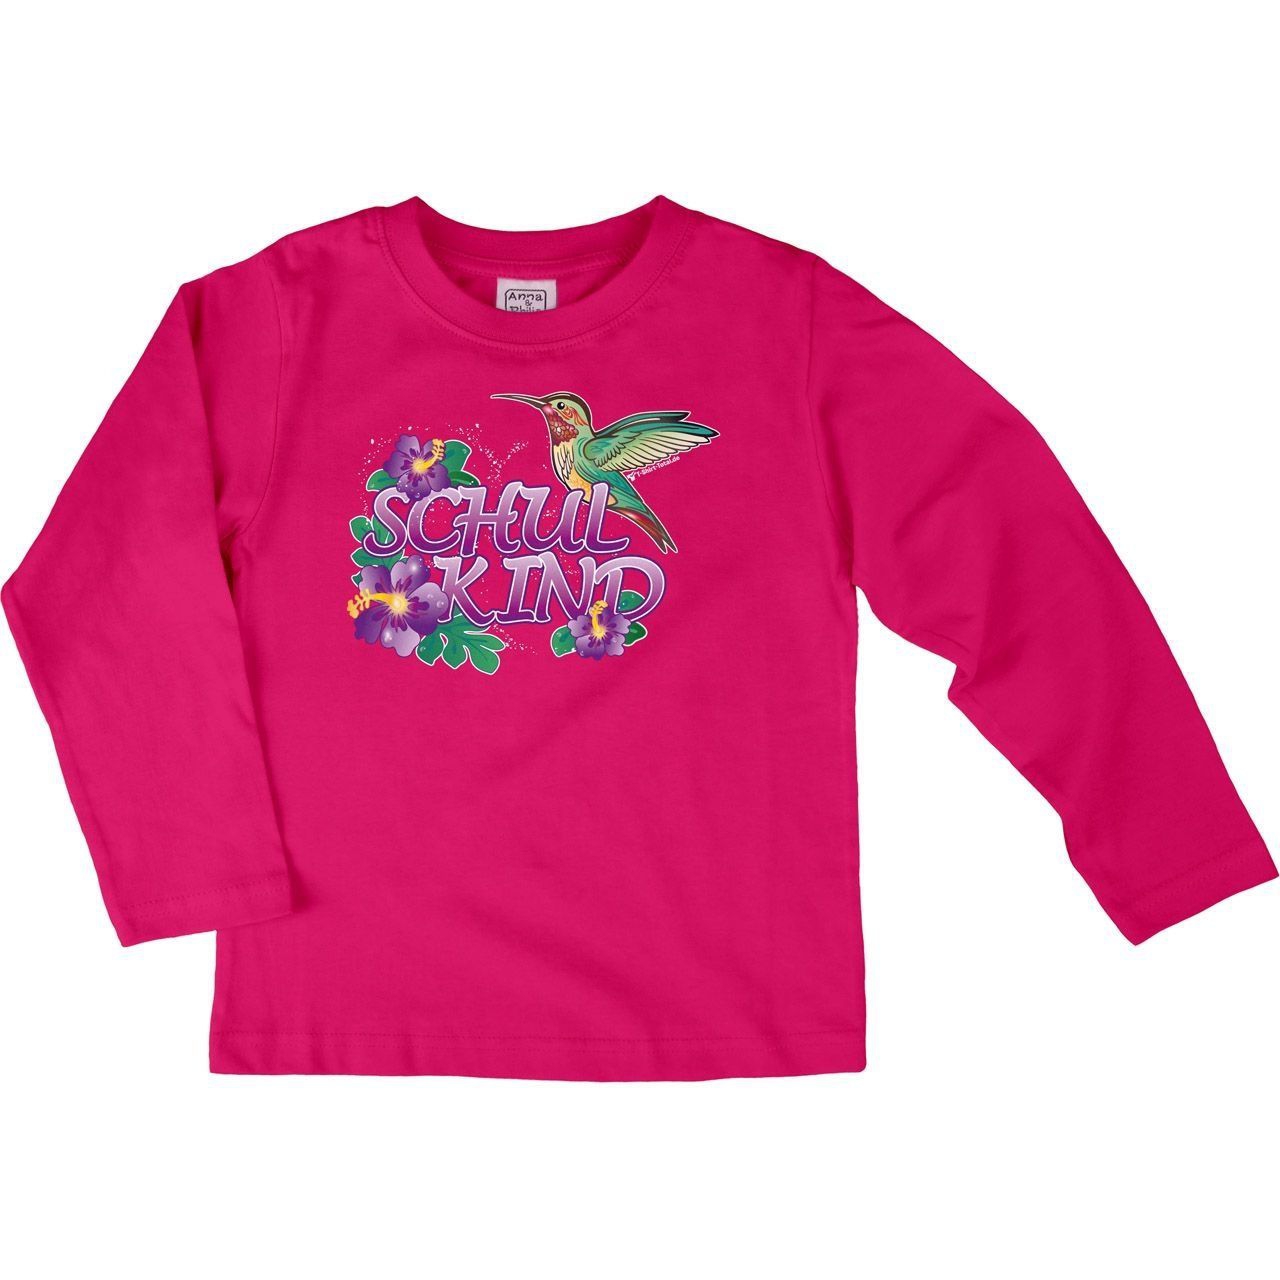 Schulkind Kolibri Kinder Langarm Shirt pink 134 / 140